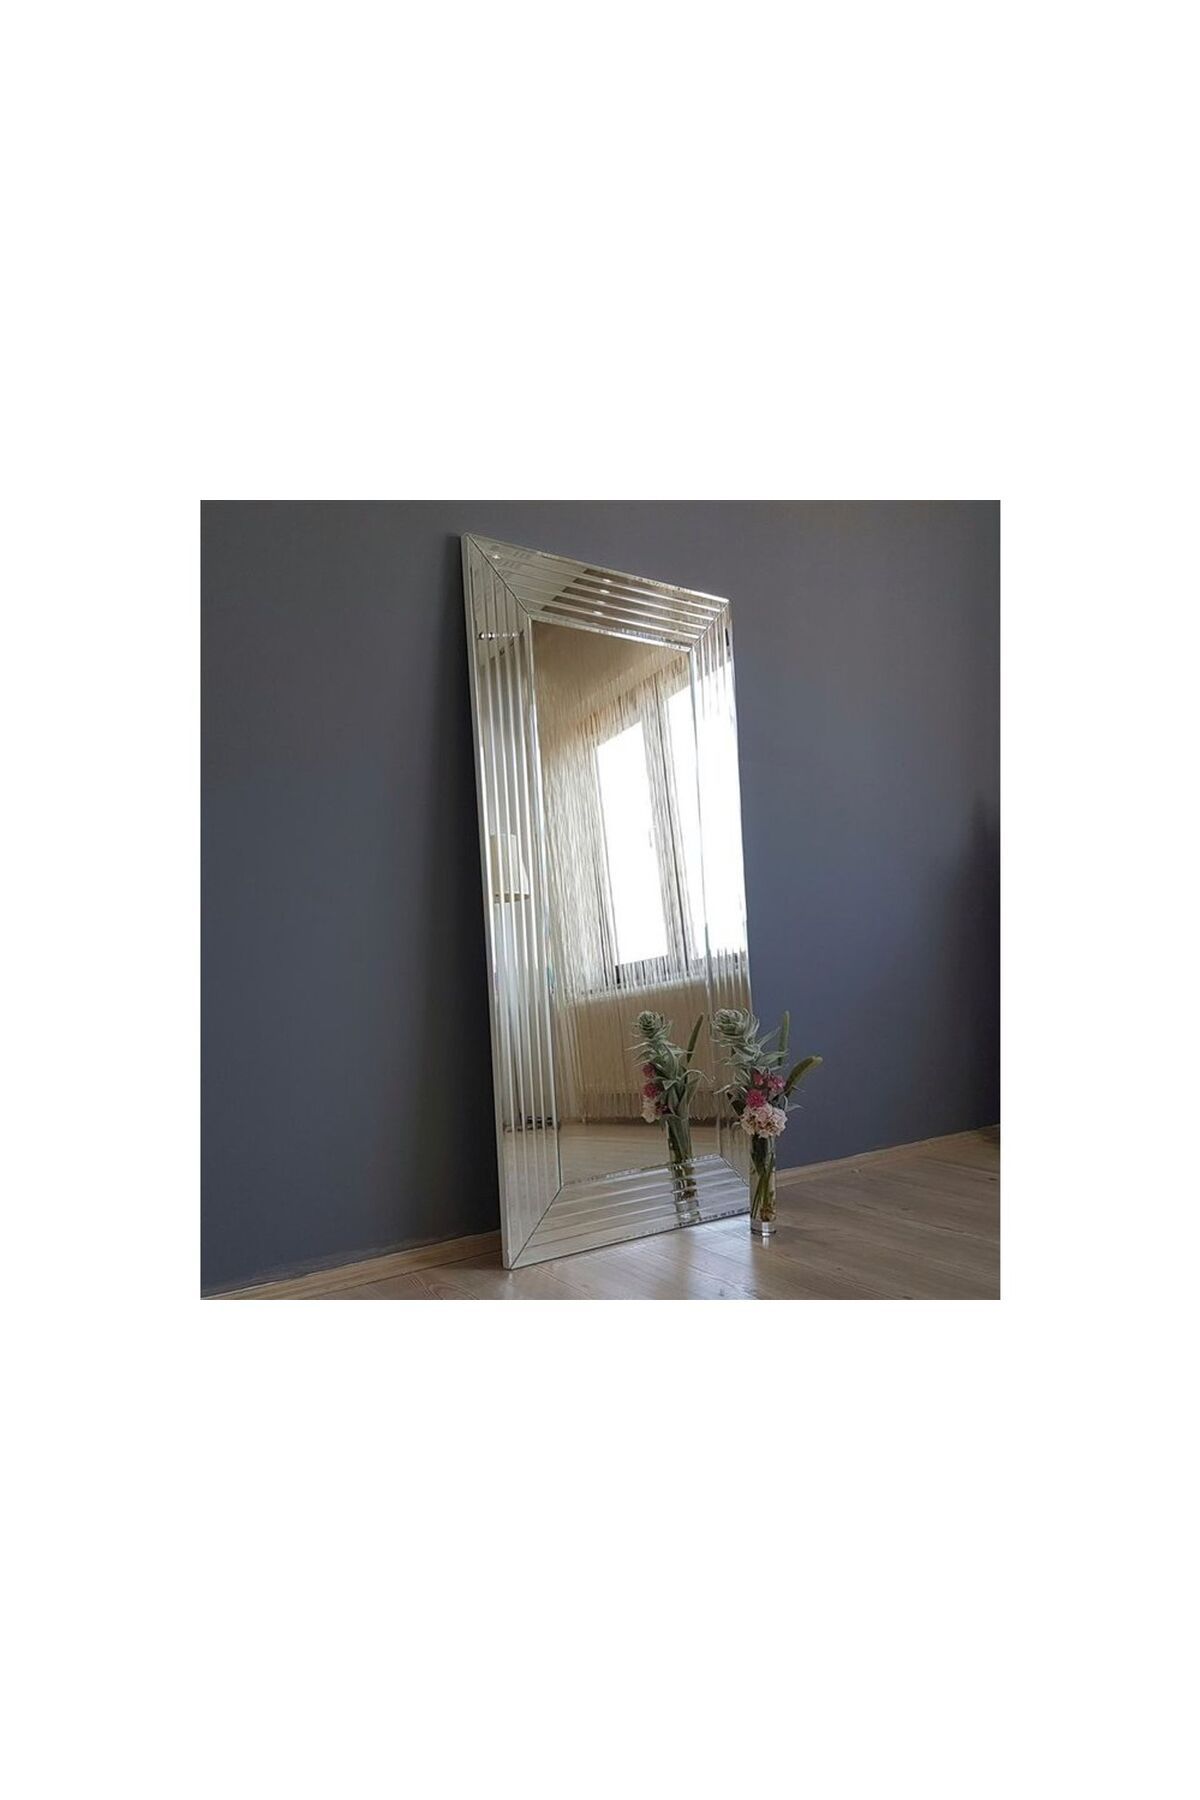 Vivense Neostill-dekoratif Duvar Salon Ofis Boy Ayna 65x130cm A305-d